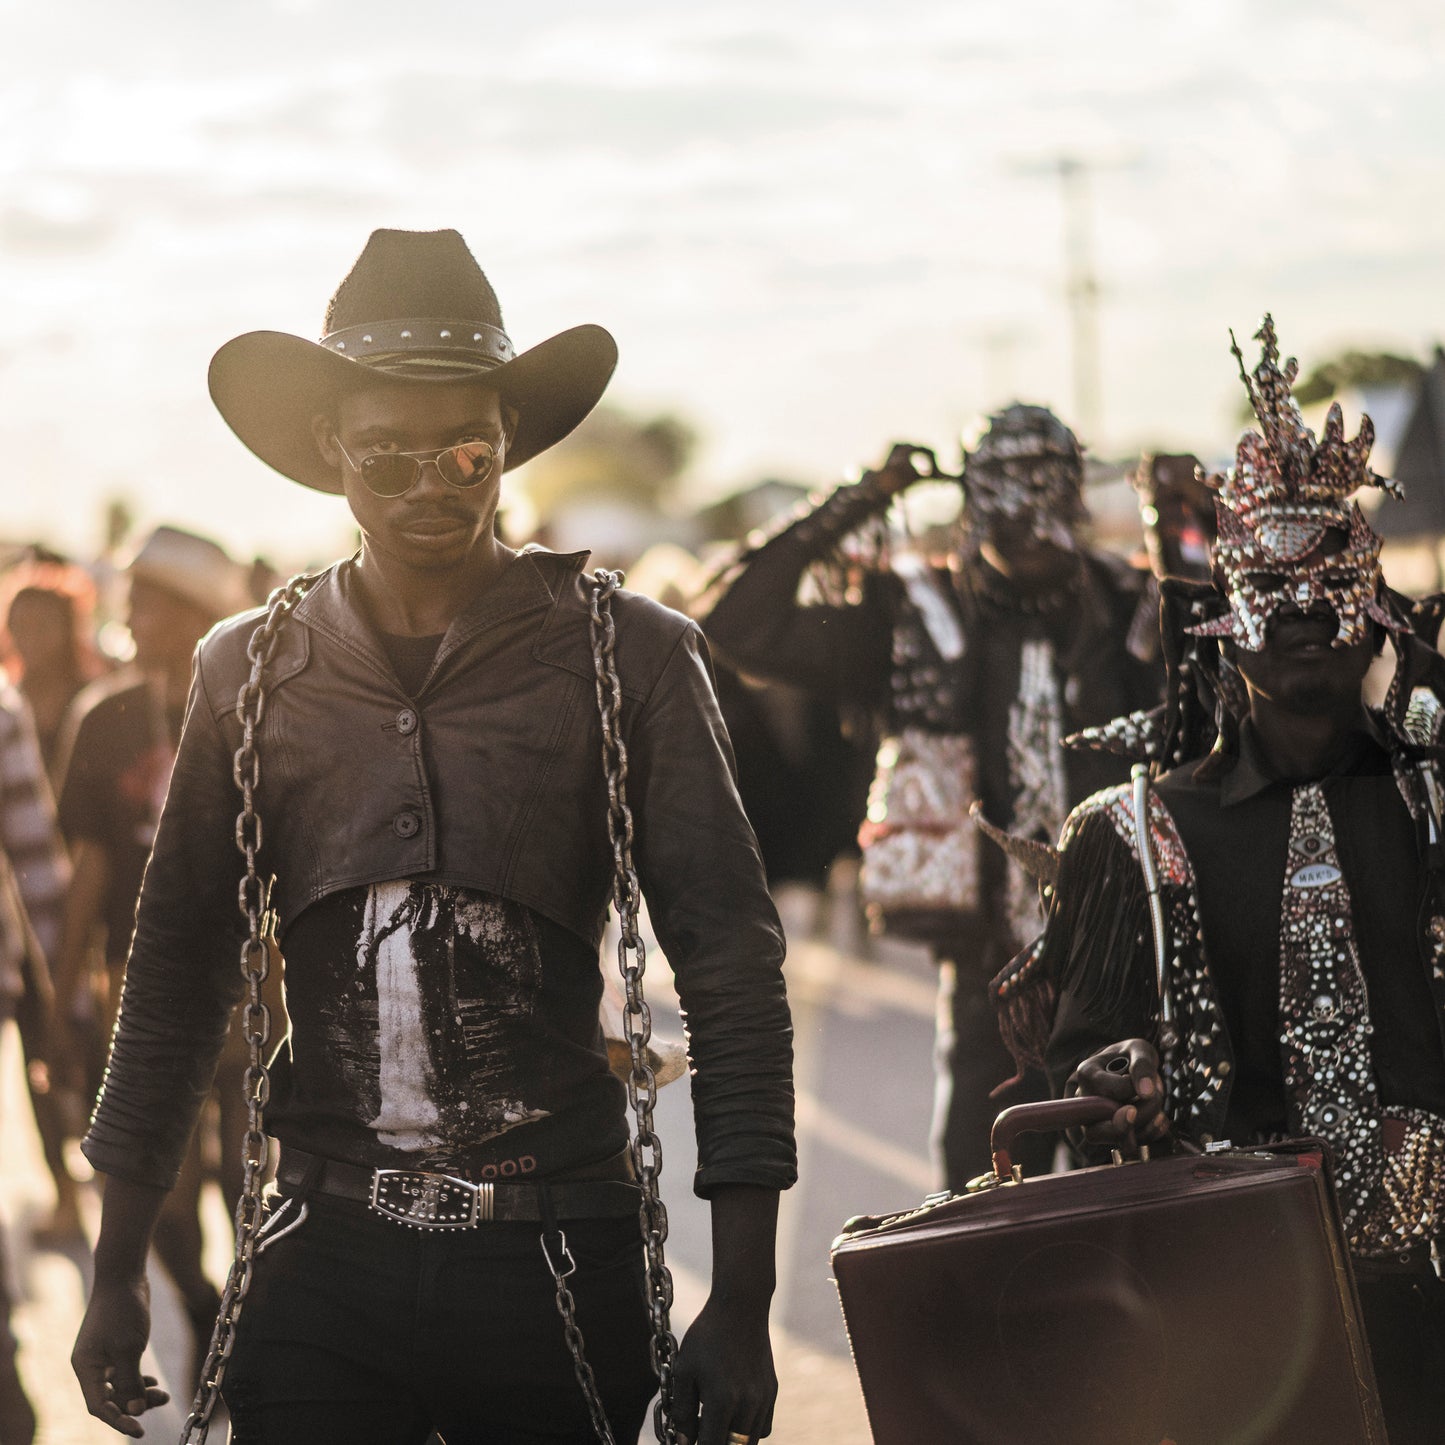 Brutal Africa - The Heavy Metal Cowboys of Botswana